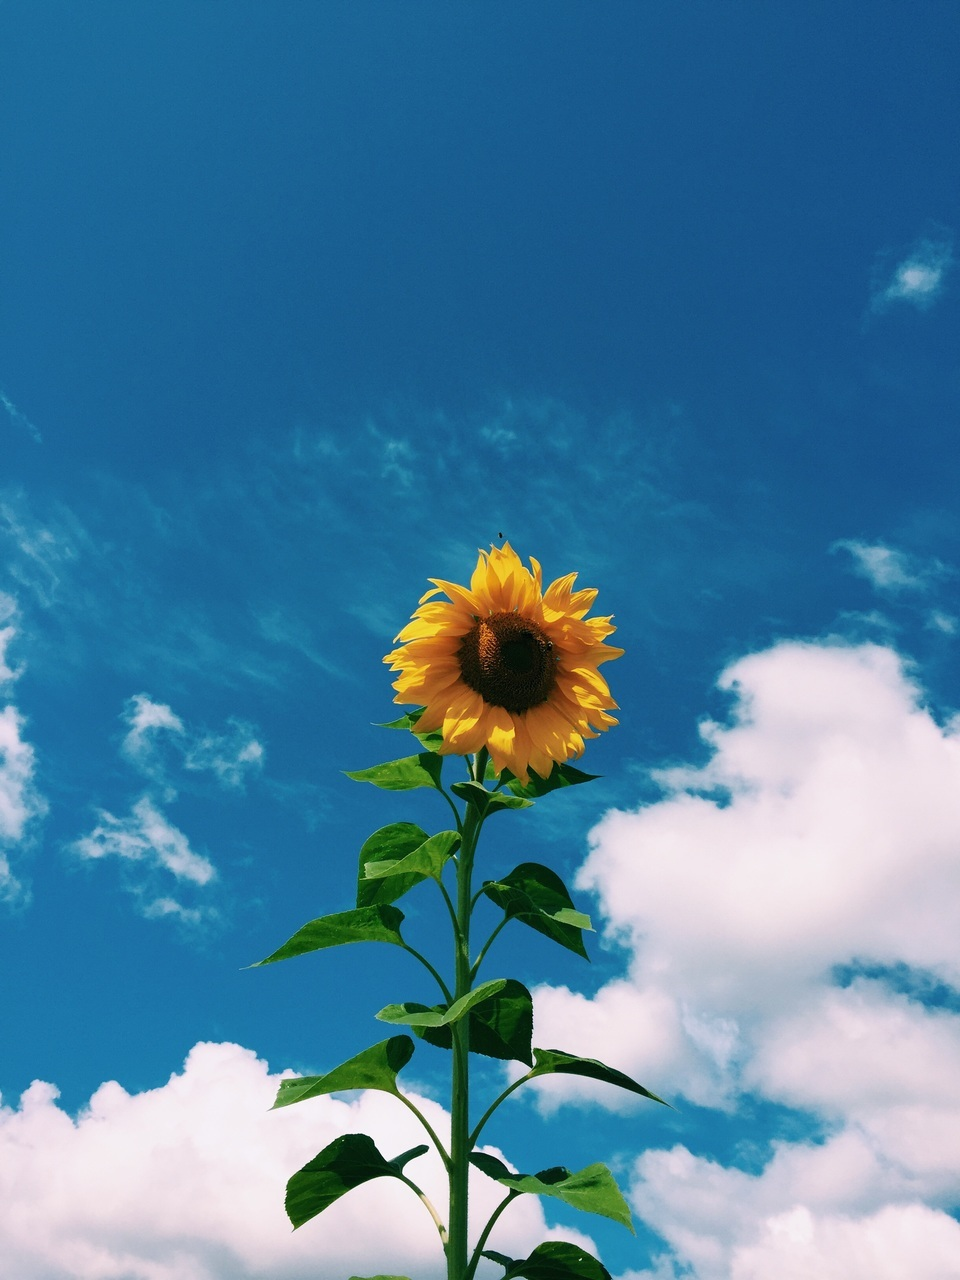 art, hipster, vintage, indie, soft grunge, sunflower, blue sky, white clouds, inspiration. Sunflower photography, Sunflower wallpaper, Sunflower picture